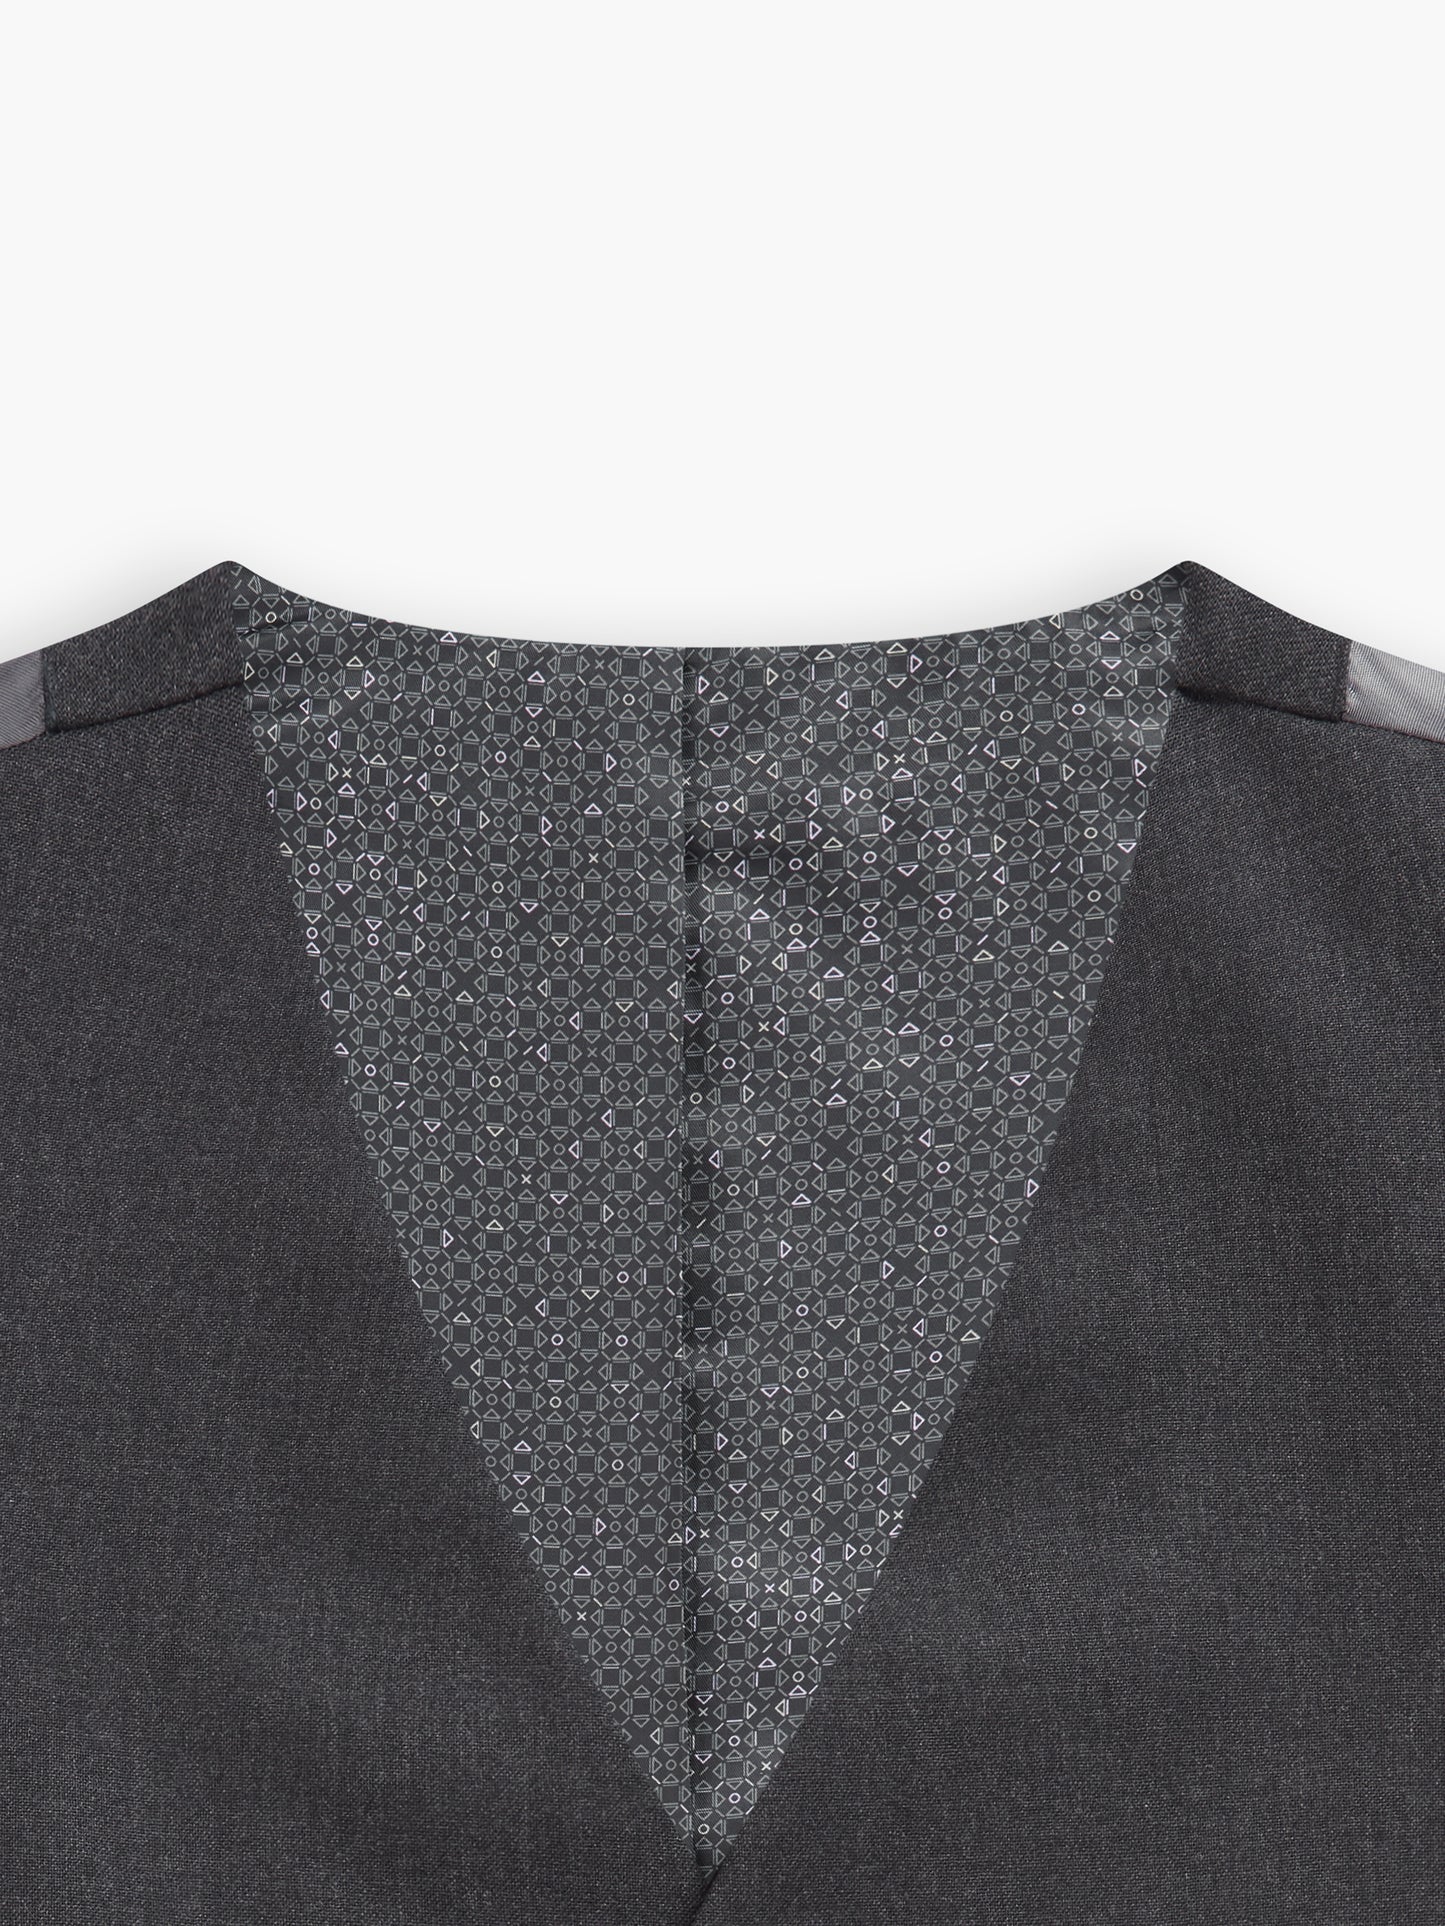 Edgeware Infinity Slim Fit Charcoal Waistcoat